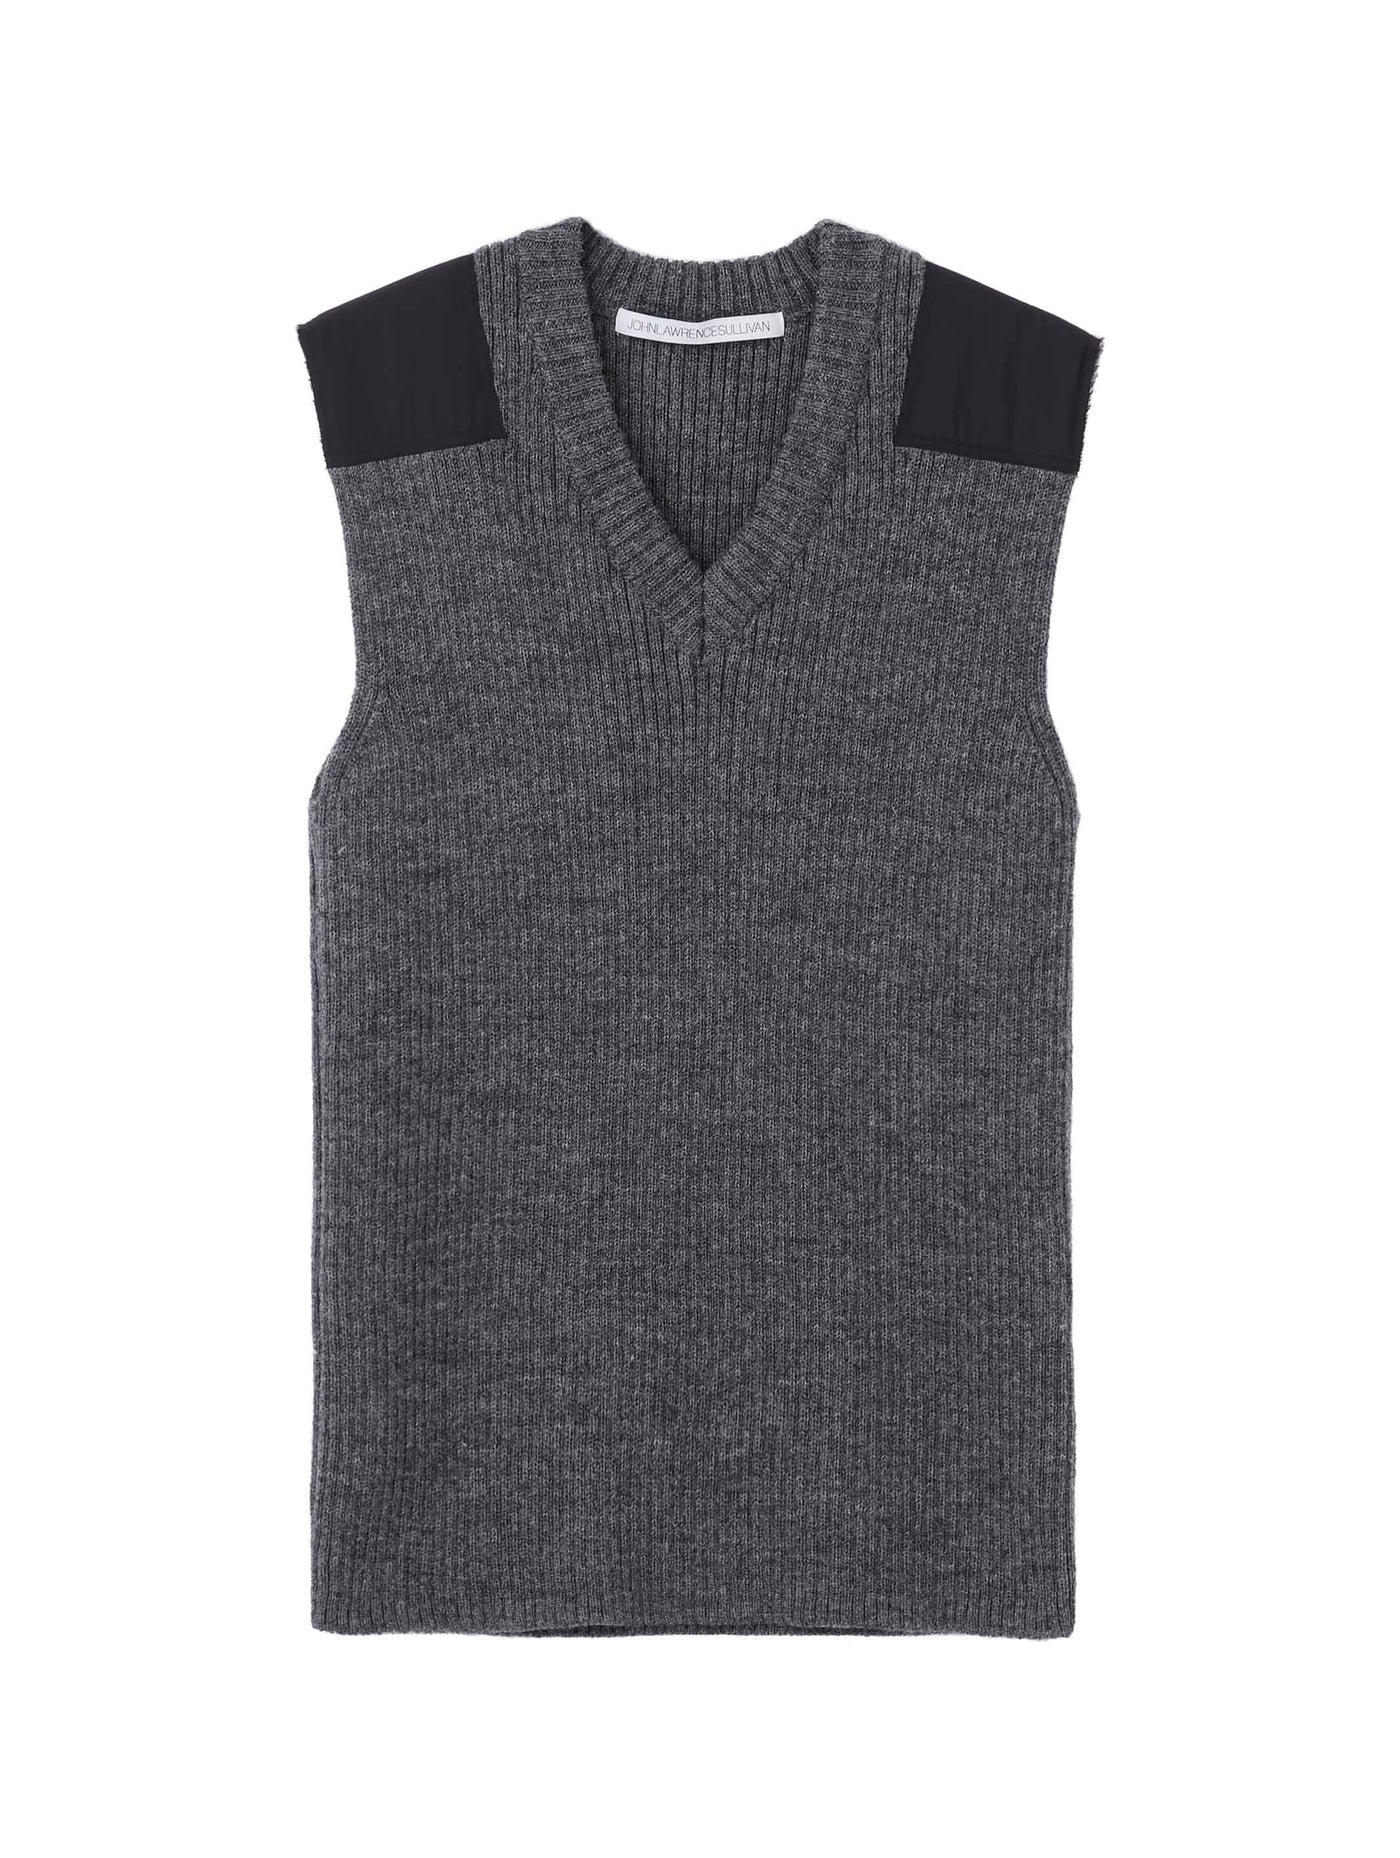 Shoulder pad rib knit vest